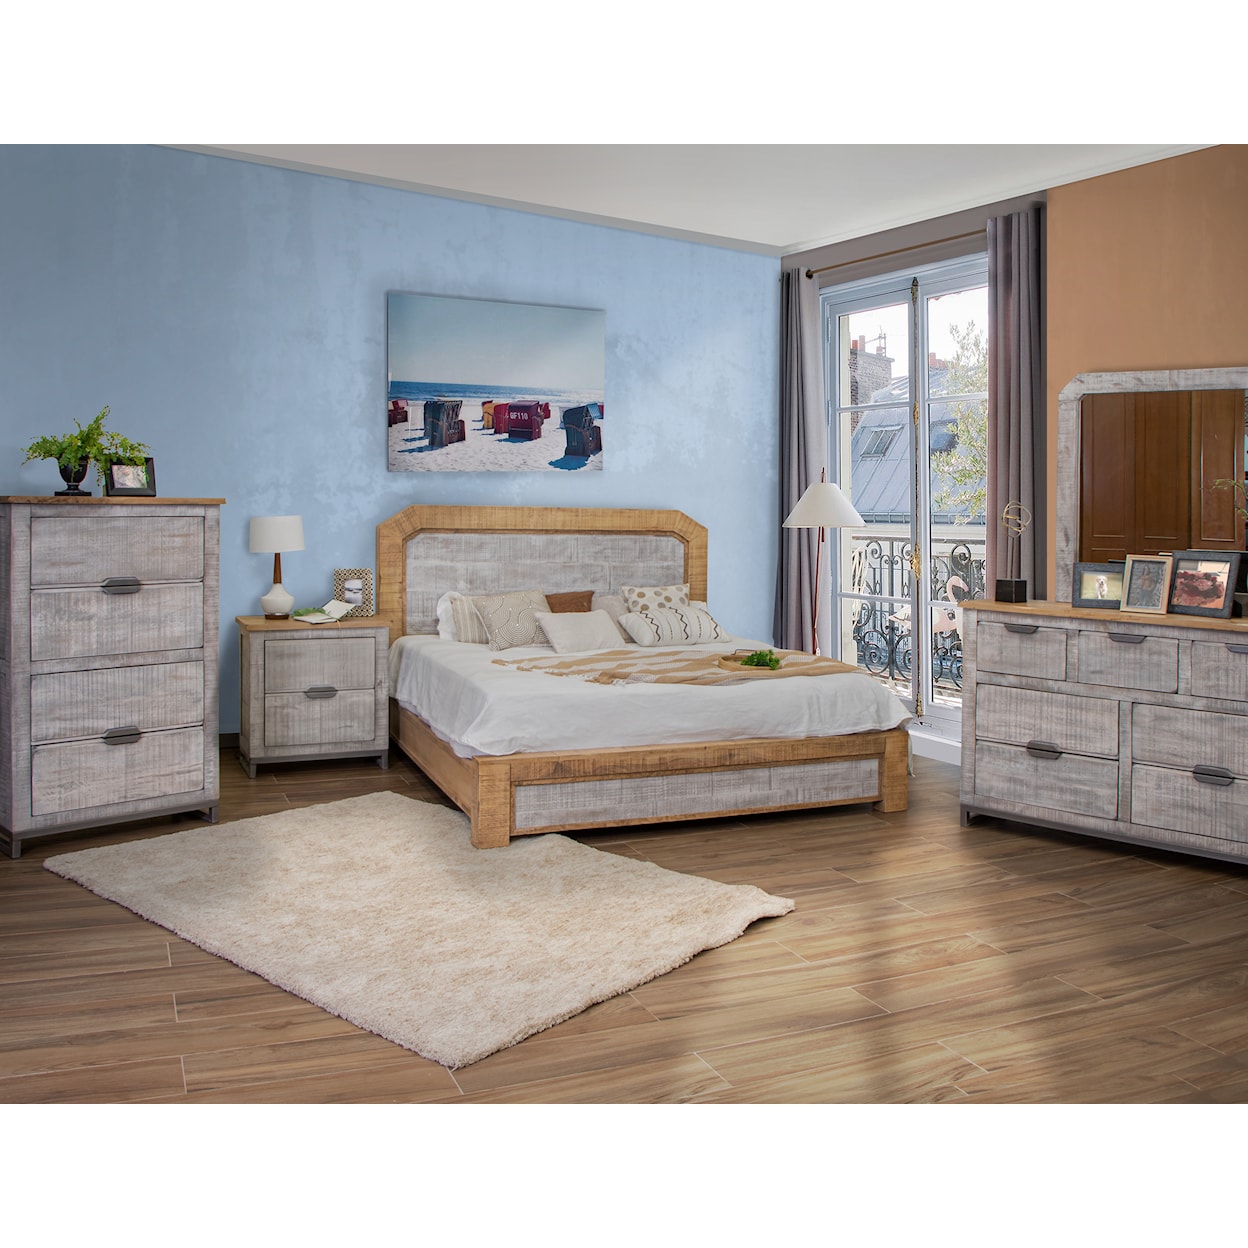 International Furniture Direct Mita Queen Bed